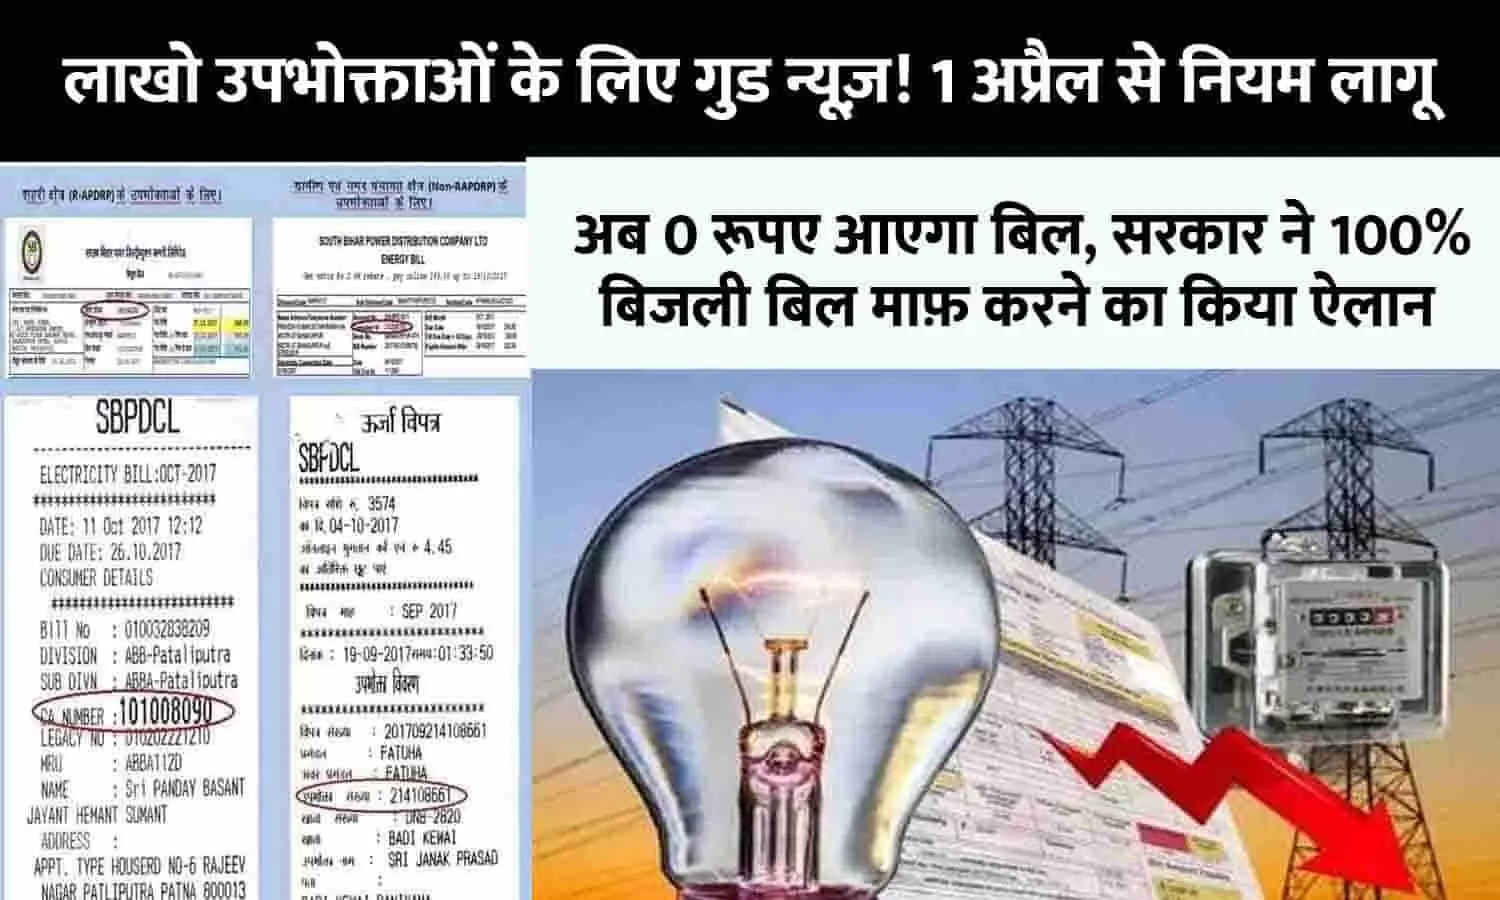 Bijli Bill Mafi Yojna Big Alert 1 April 2023: लाखो उपभोक्ताओं के लिए गुड न्यूज़! 1 अप्रैल से नियम लागू, अब 0 रूपए आएगा बिल, सरकार ने 100% बिजली बिल माफ़ करने का किया ऐलान